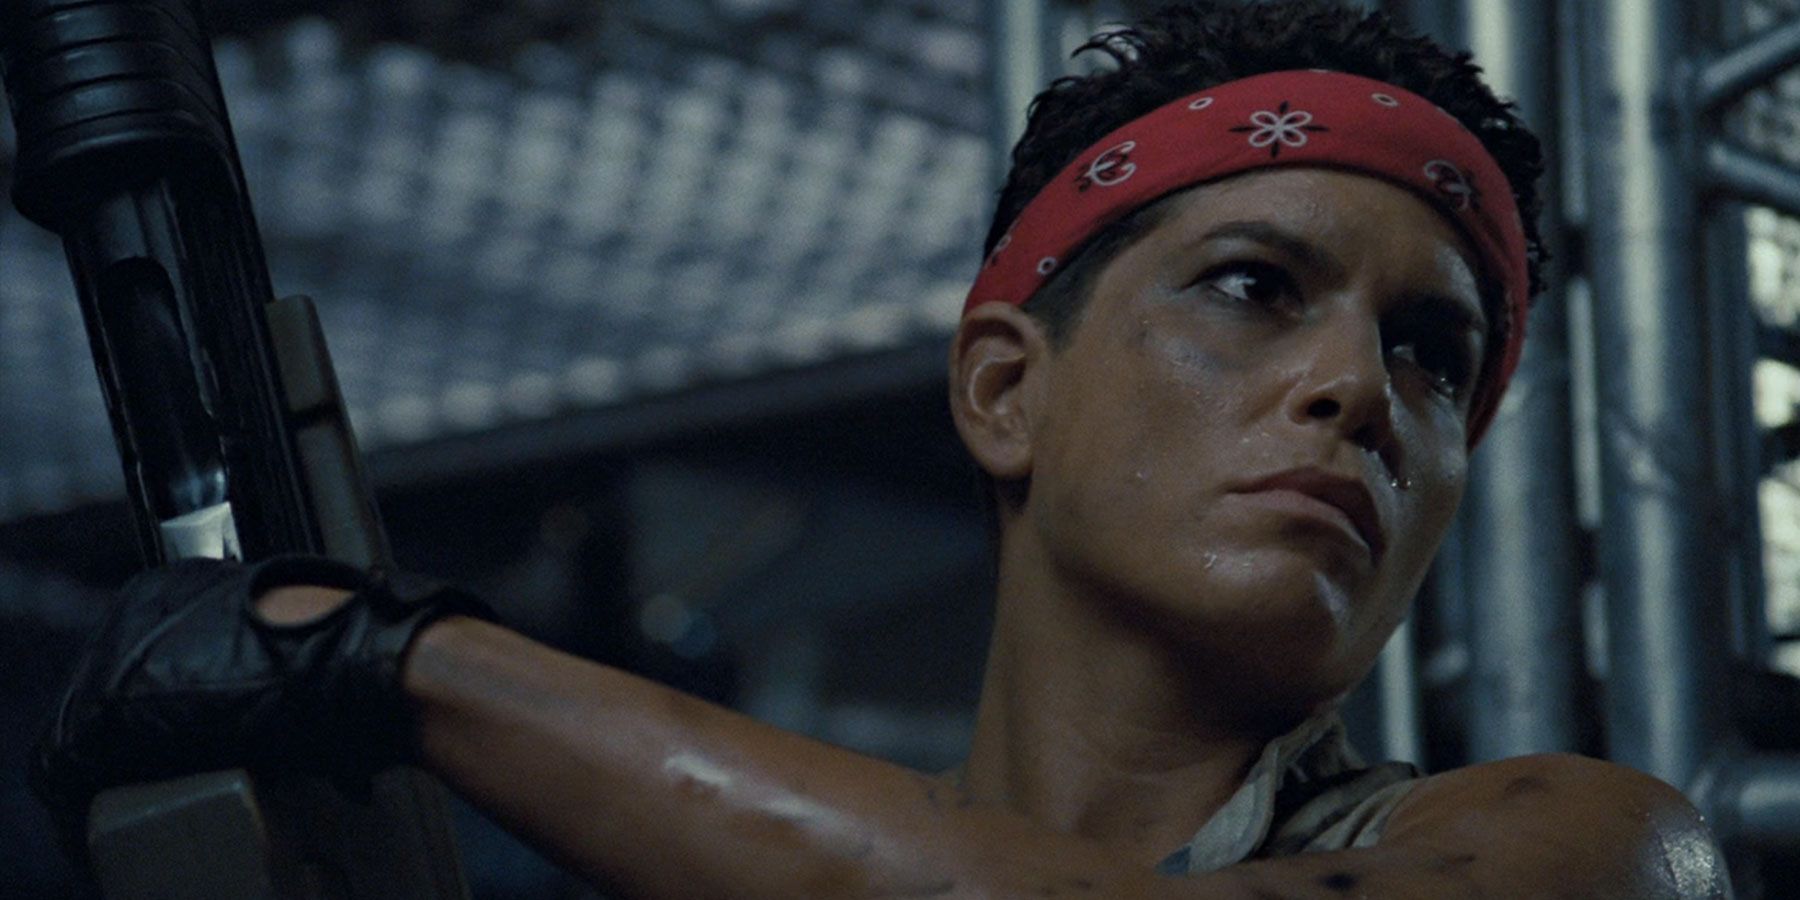 Jenette Goldstein as Vasquez in Aliens